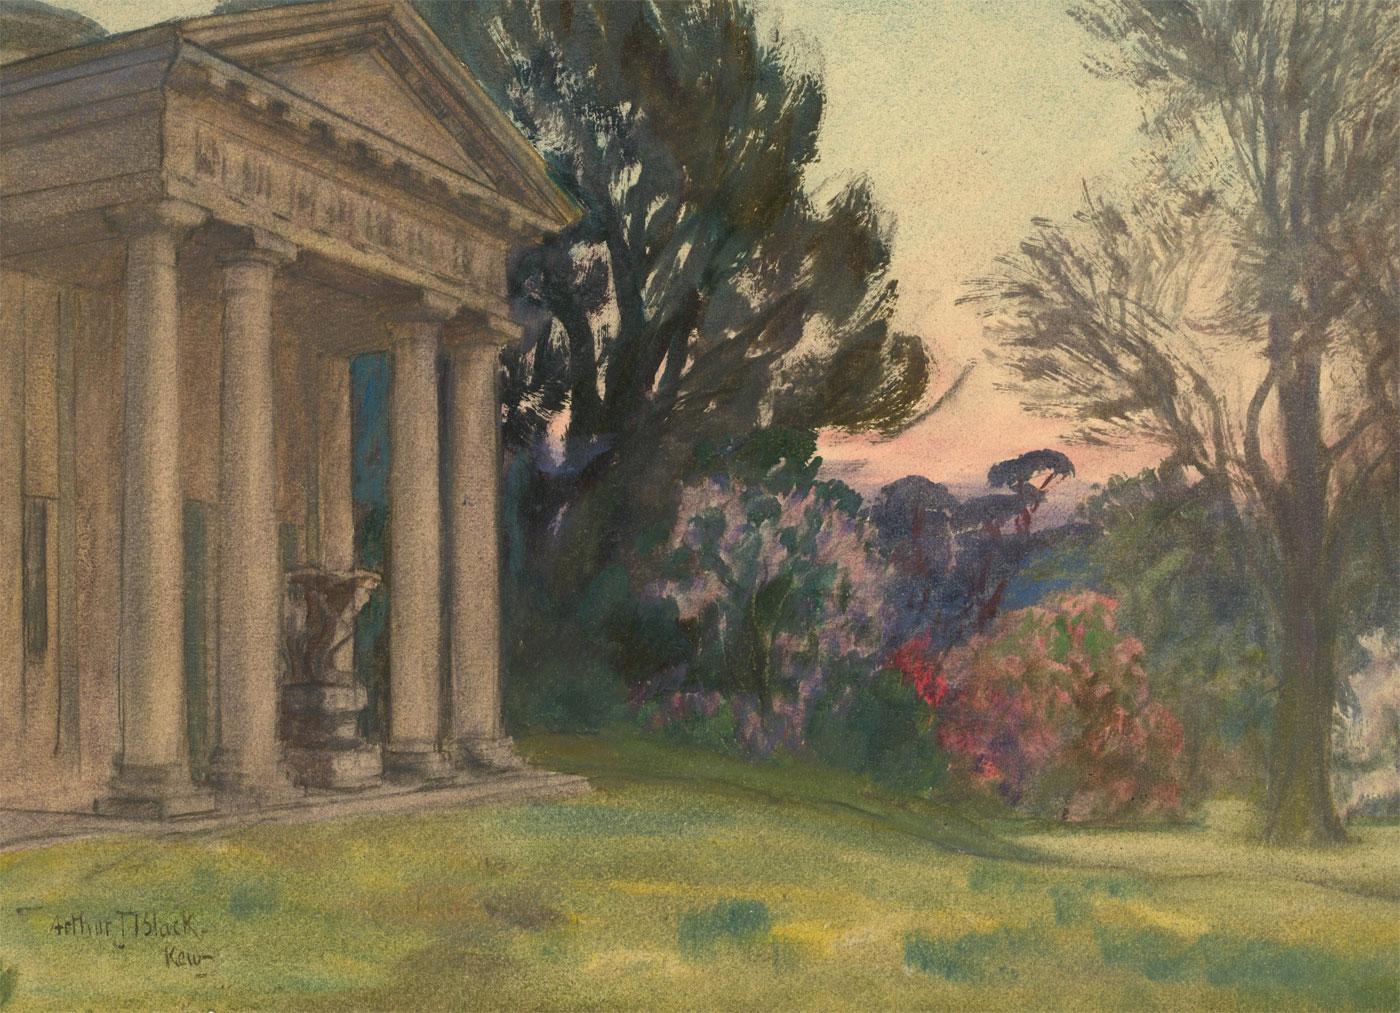 Unknown Landscape Art - Arthur John Black (1855-1936) - 20th Century Watercolour, View at Kew